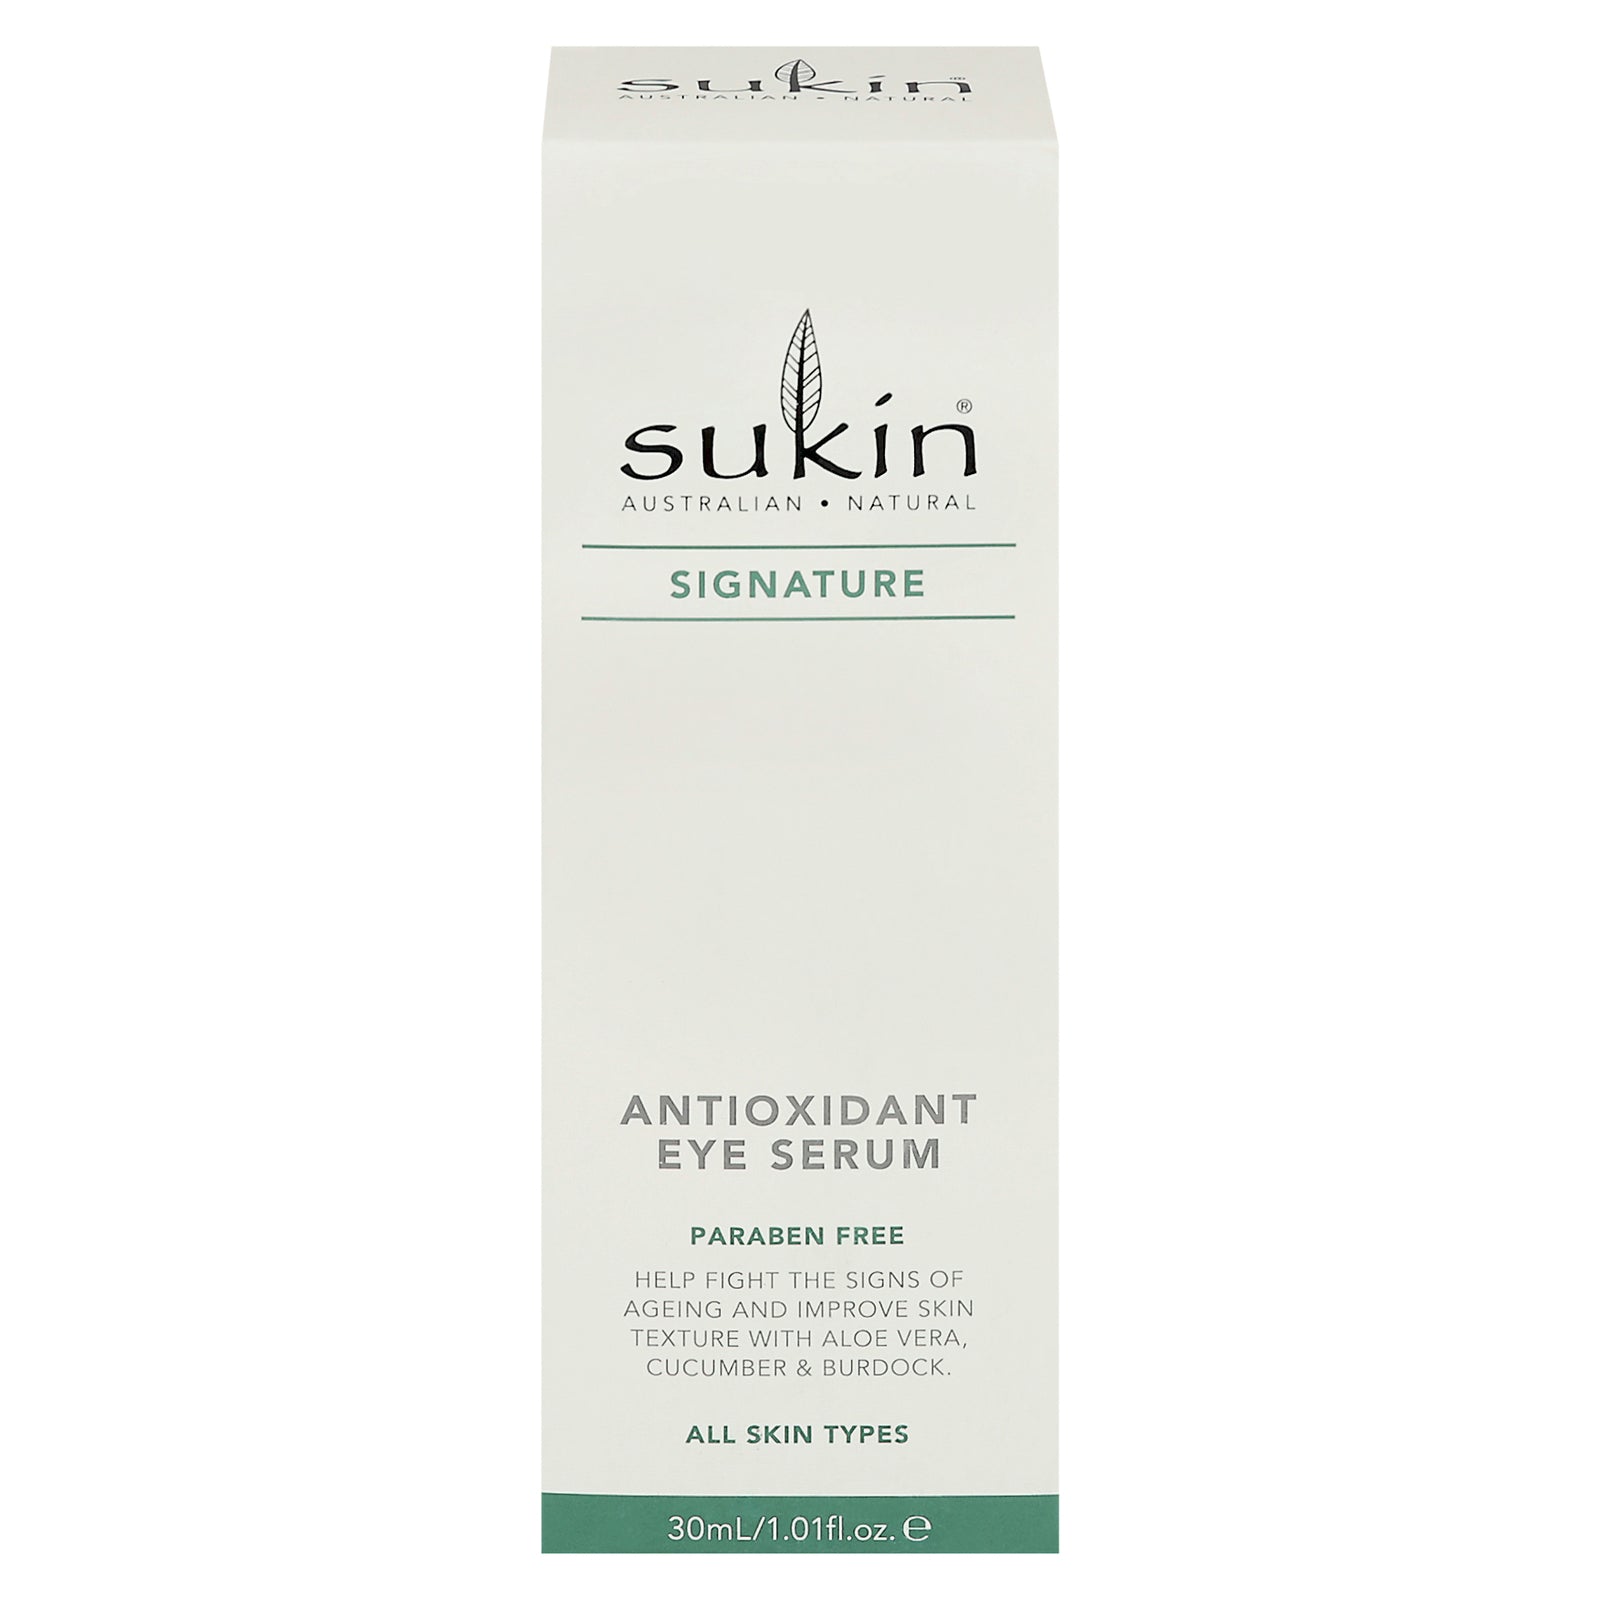 Sukin - Antioxidant Eye Serum - 1 Each - 1.01 Fz